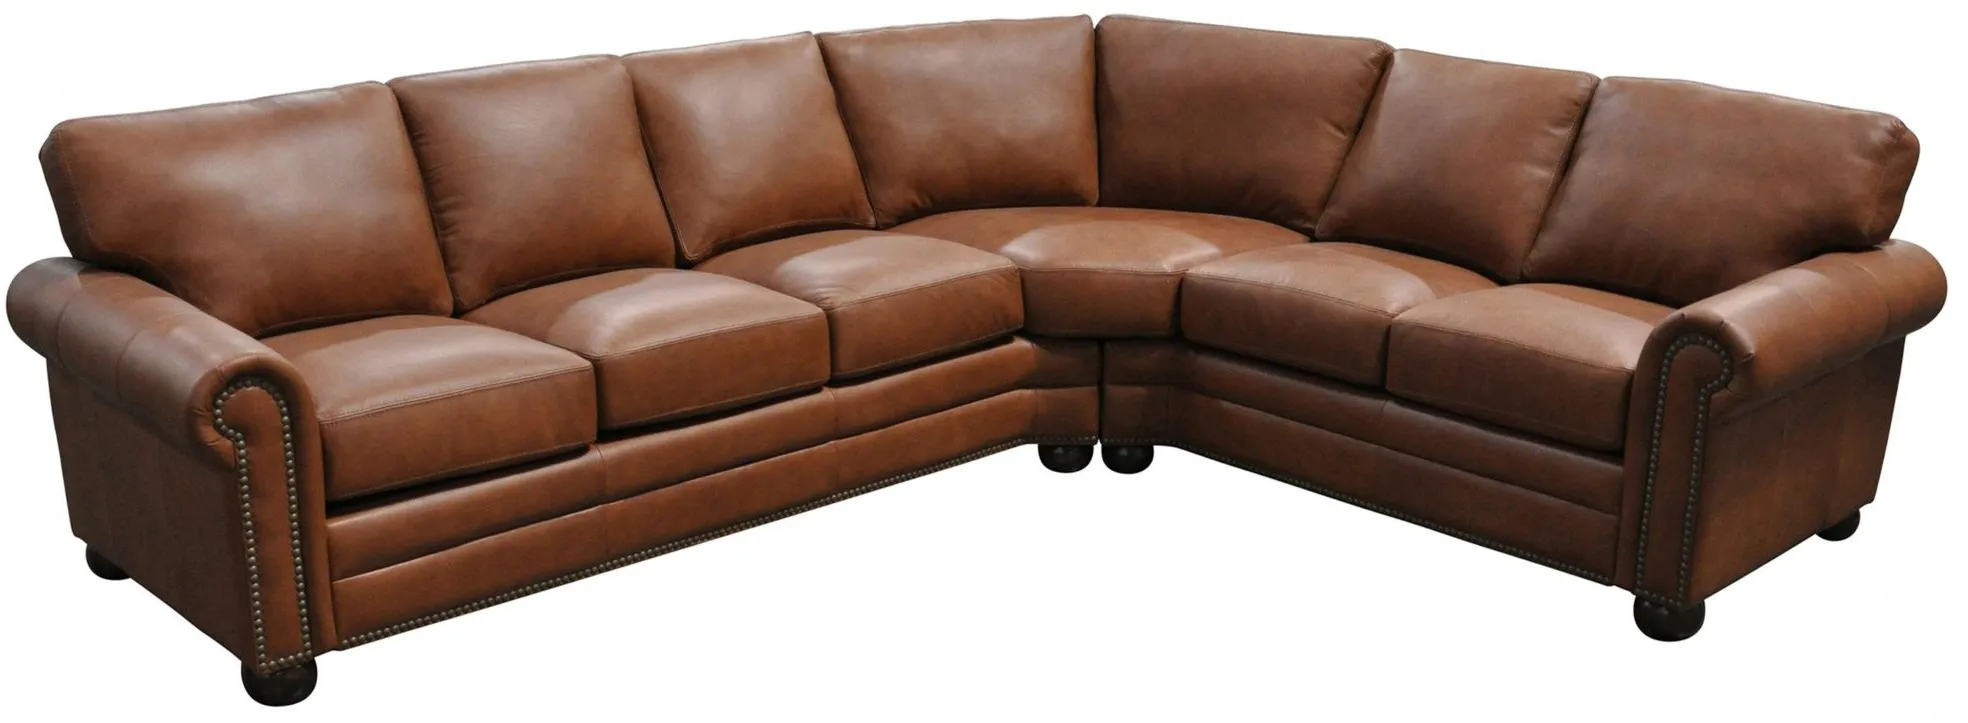 Savannah 2-pc. Sectional Sofa in Urban Cedar by Omnia Leather